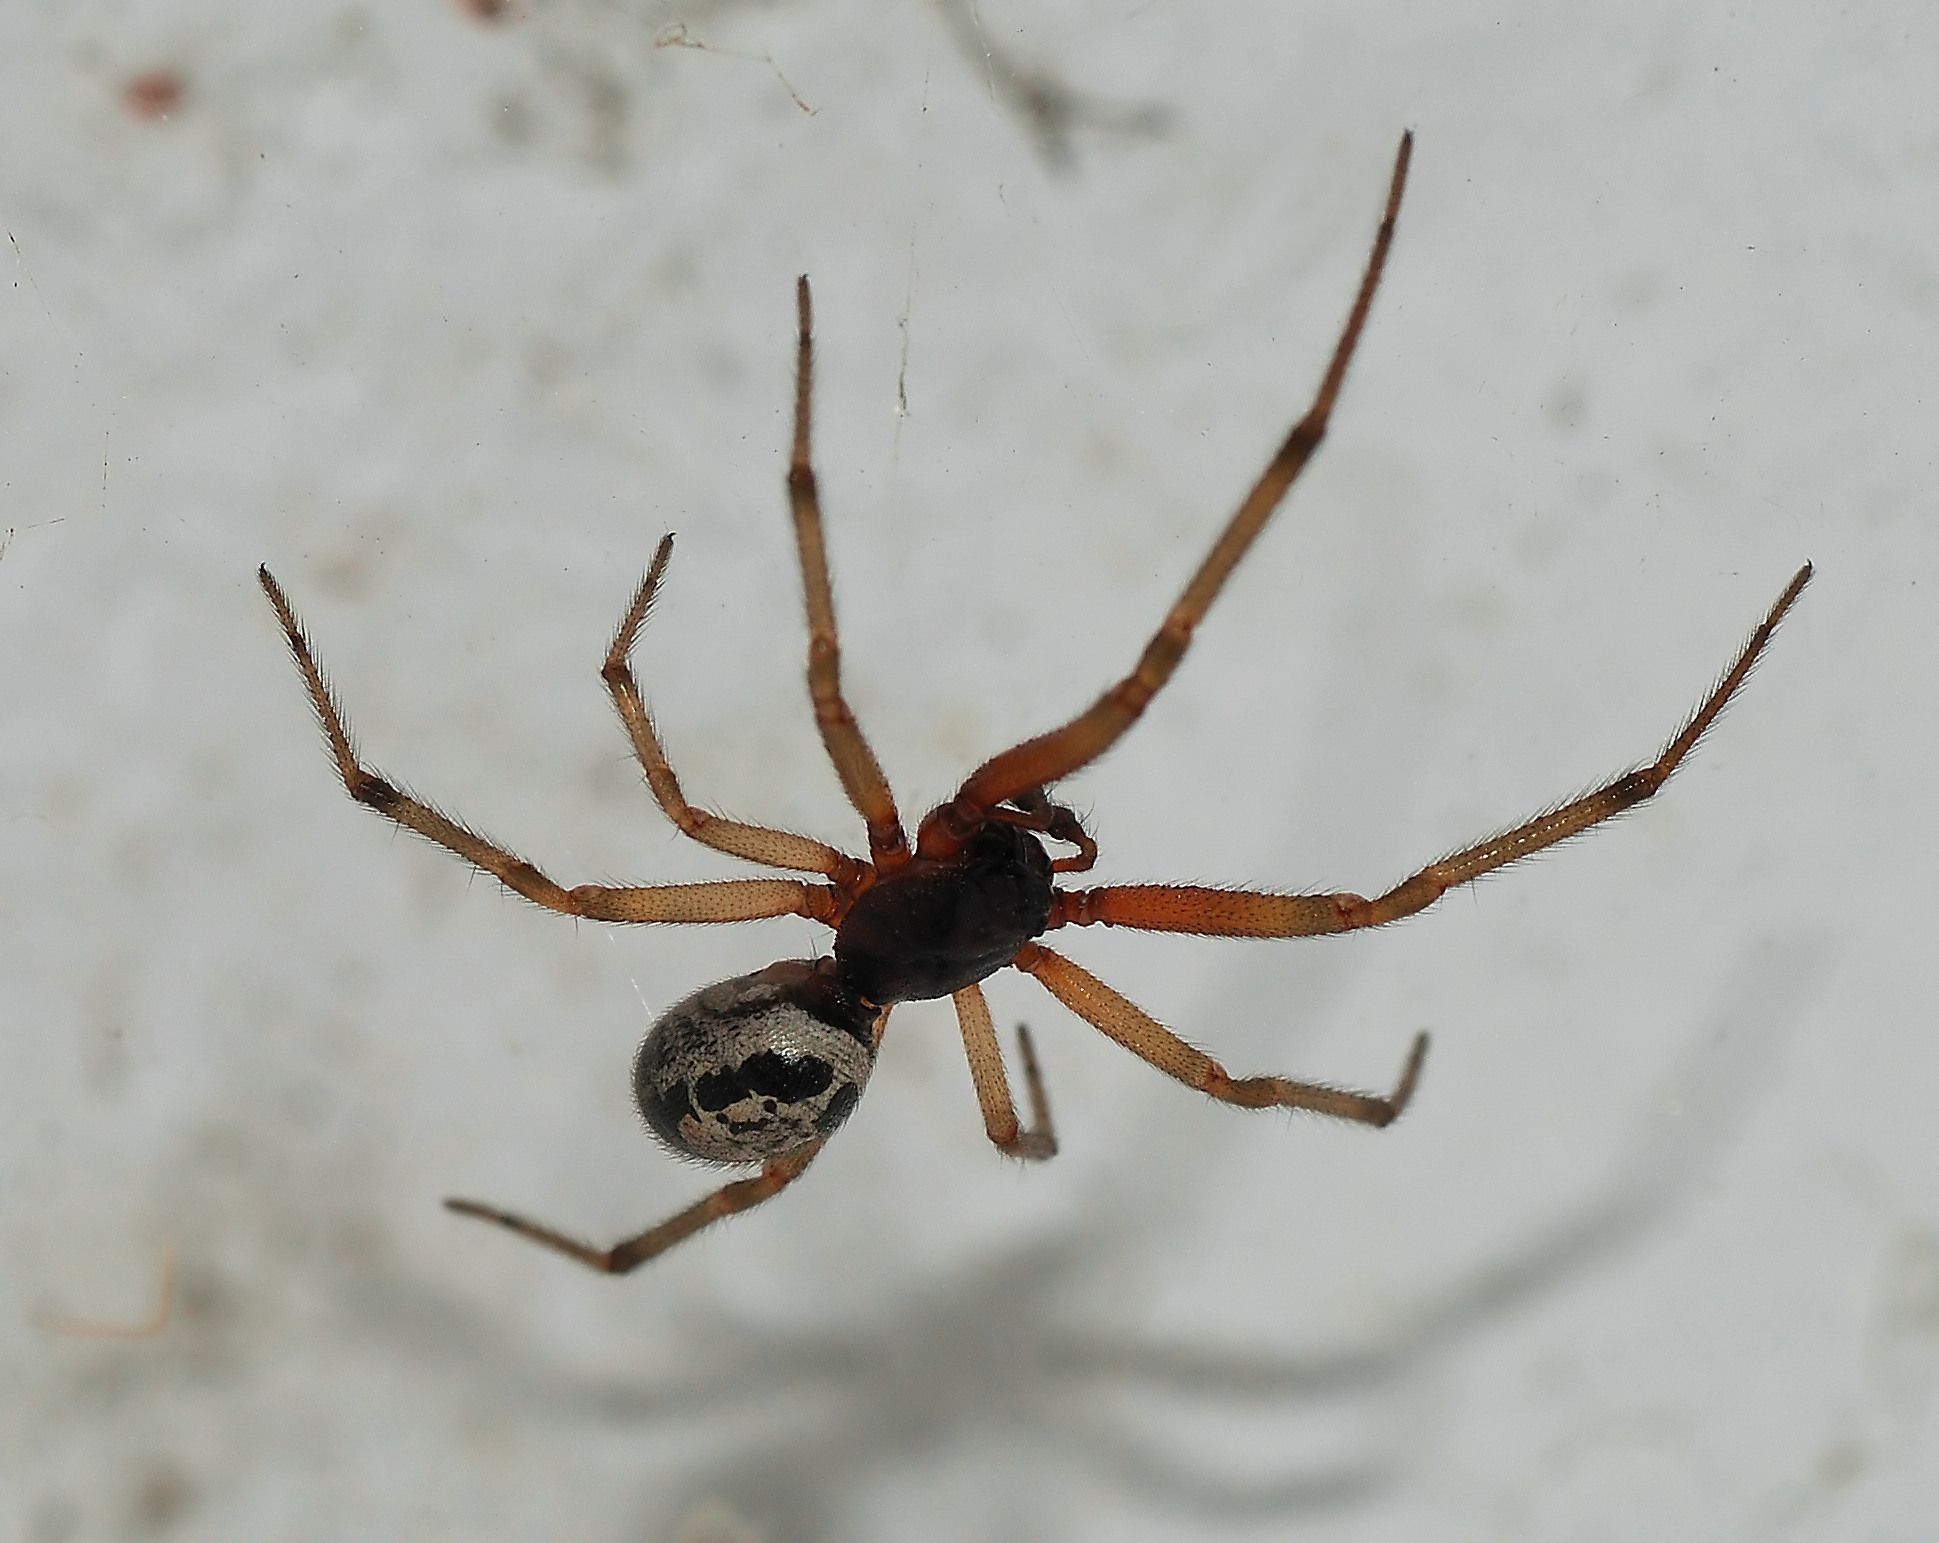 A noble false widow spider